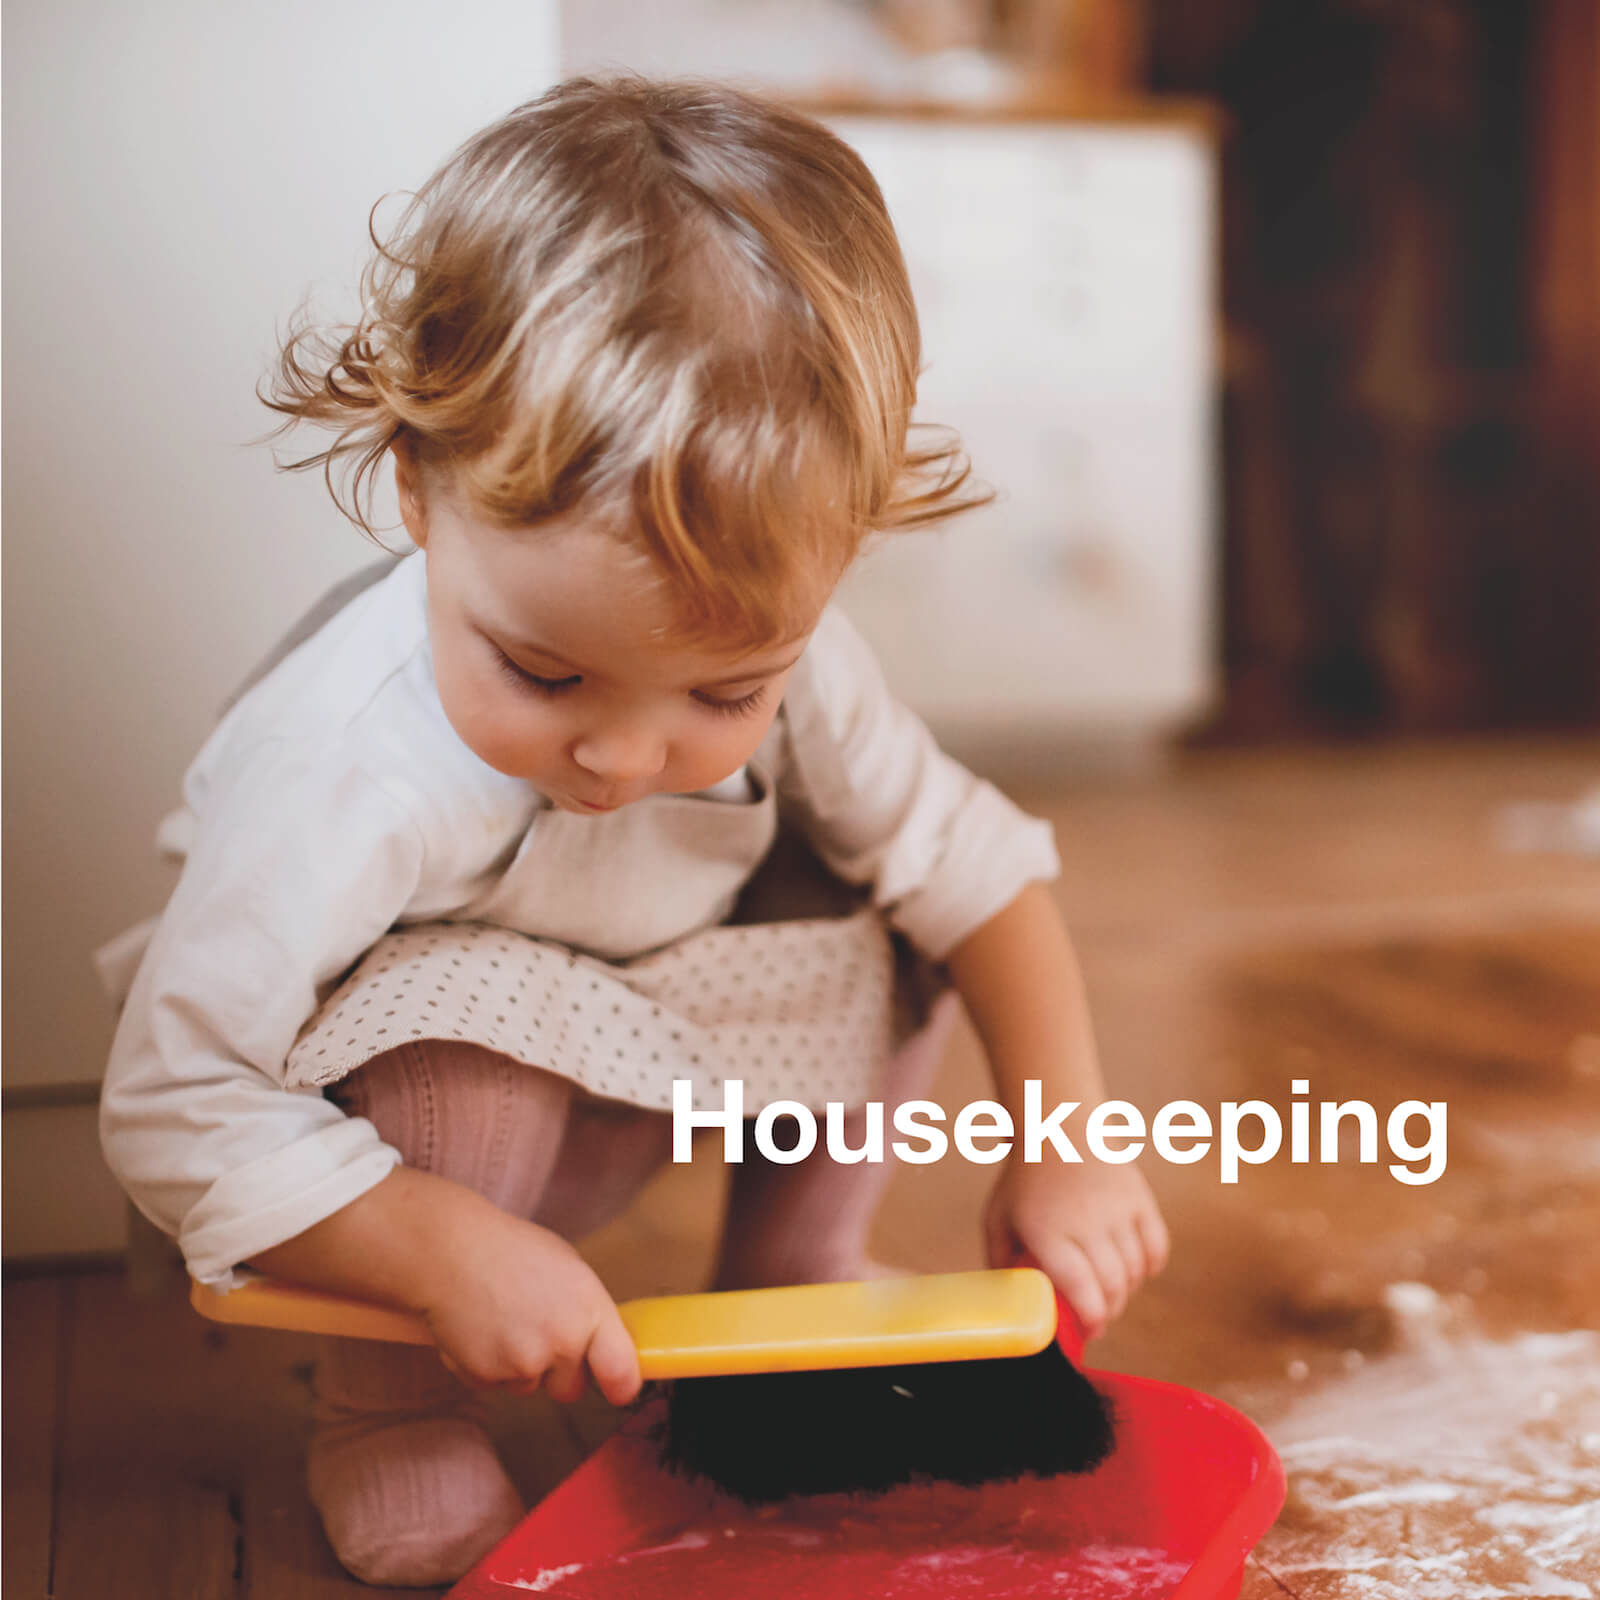 Housekeepers in proivate households in Berlin, Munich, Hamburg, Frankfurt, international wide.